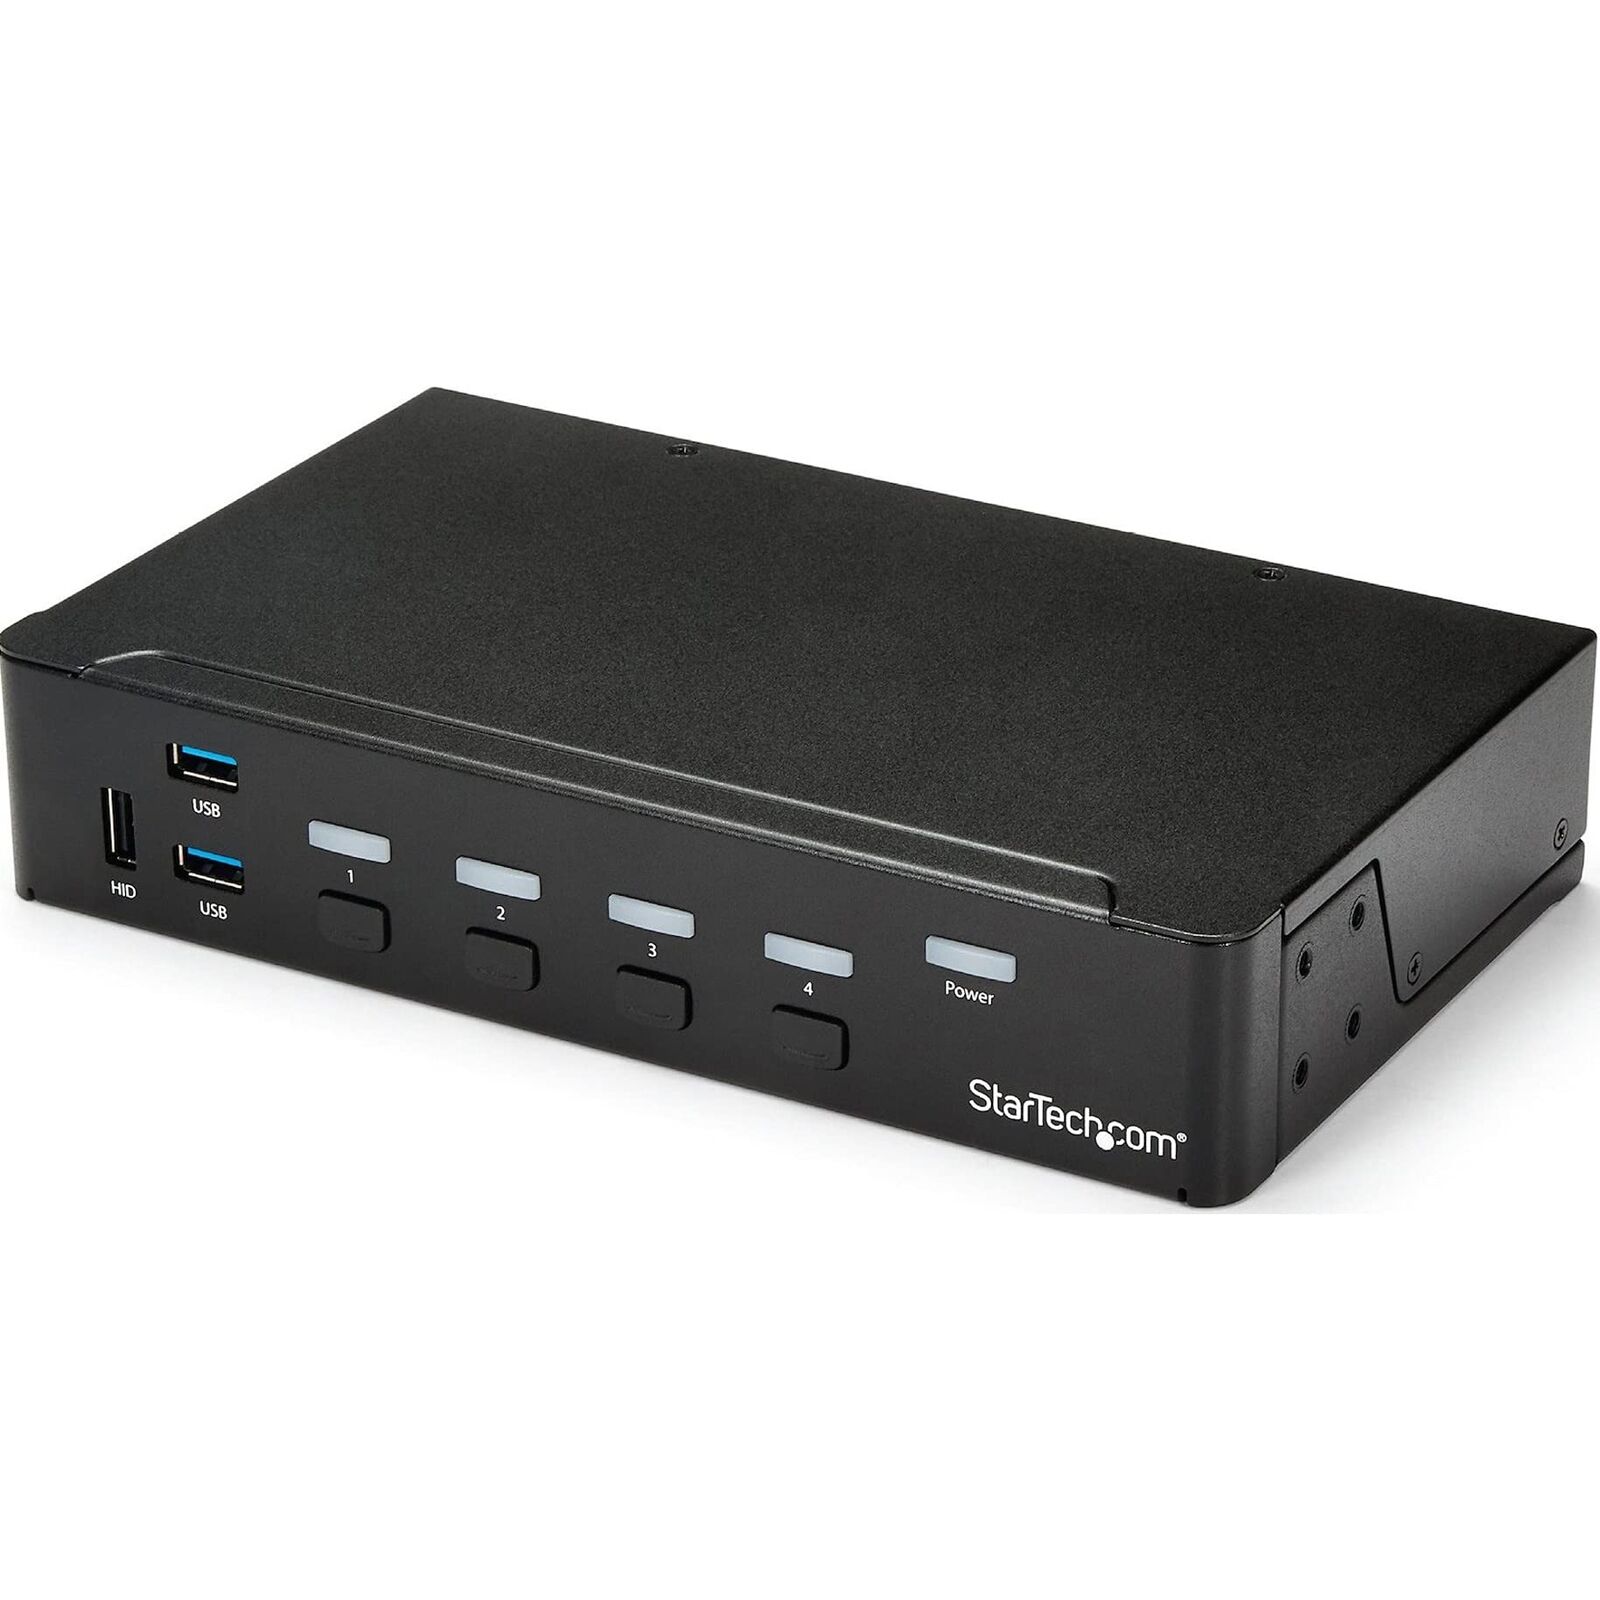 StarTech.com SV431HDU3A2 4-Port HDMI KVM Switch - Built-in USB 3.0 Hub for